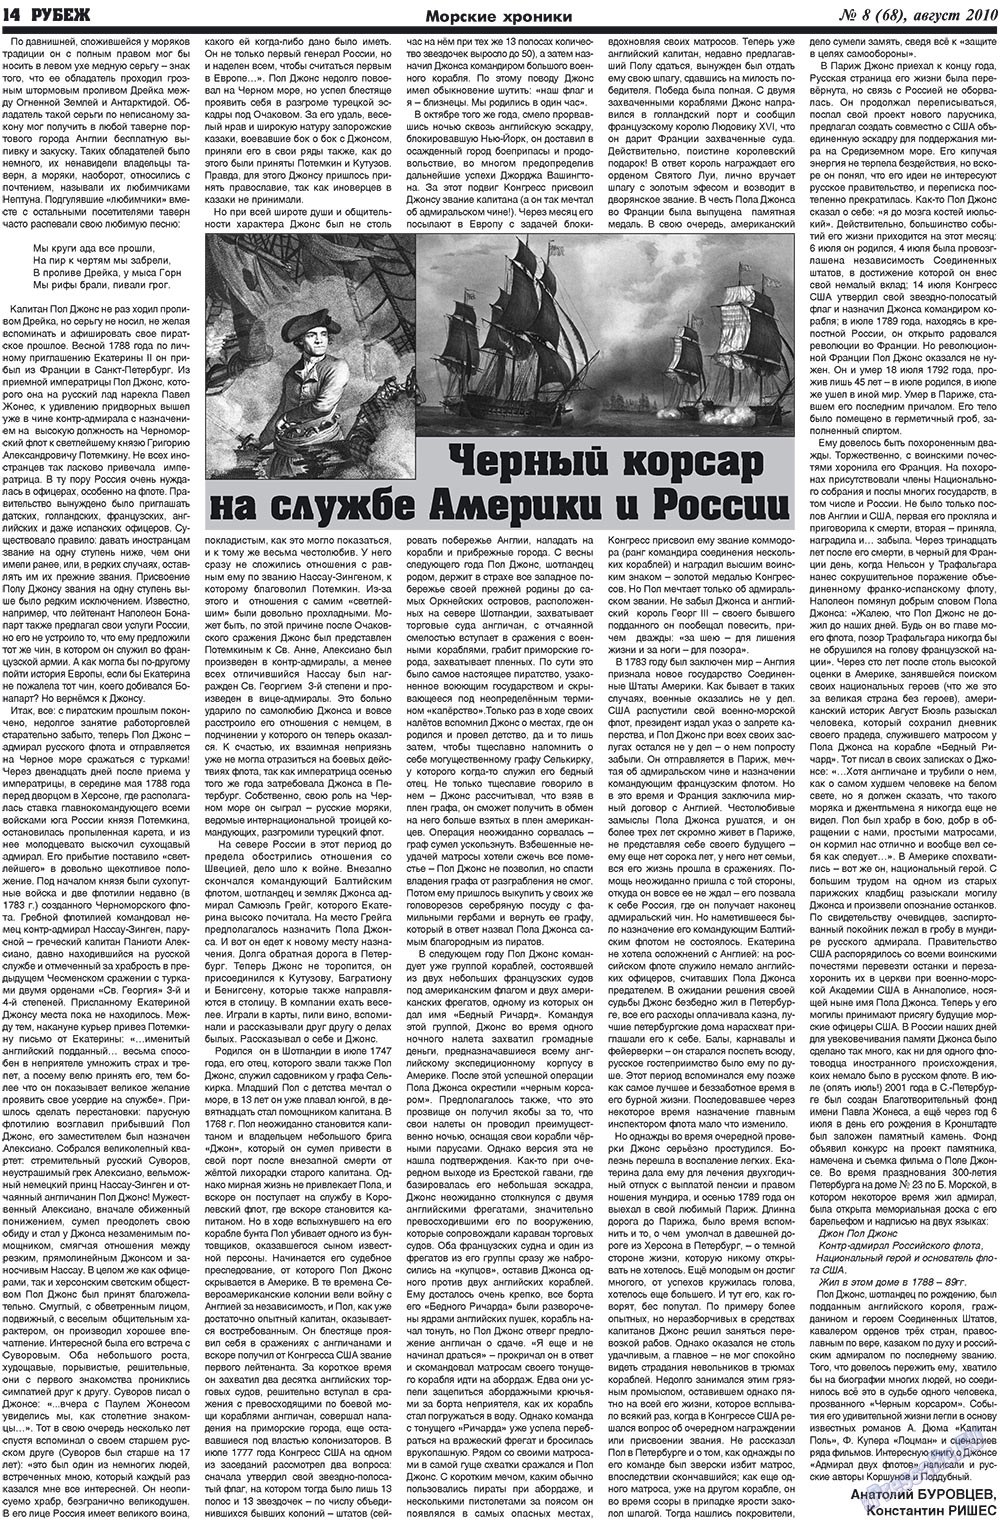 Рубеж, газета. 2010 №8 стр.14